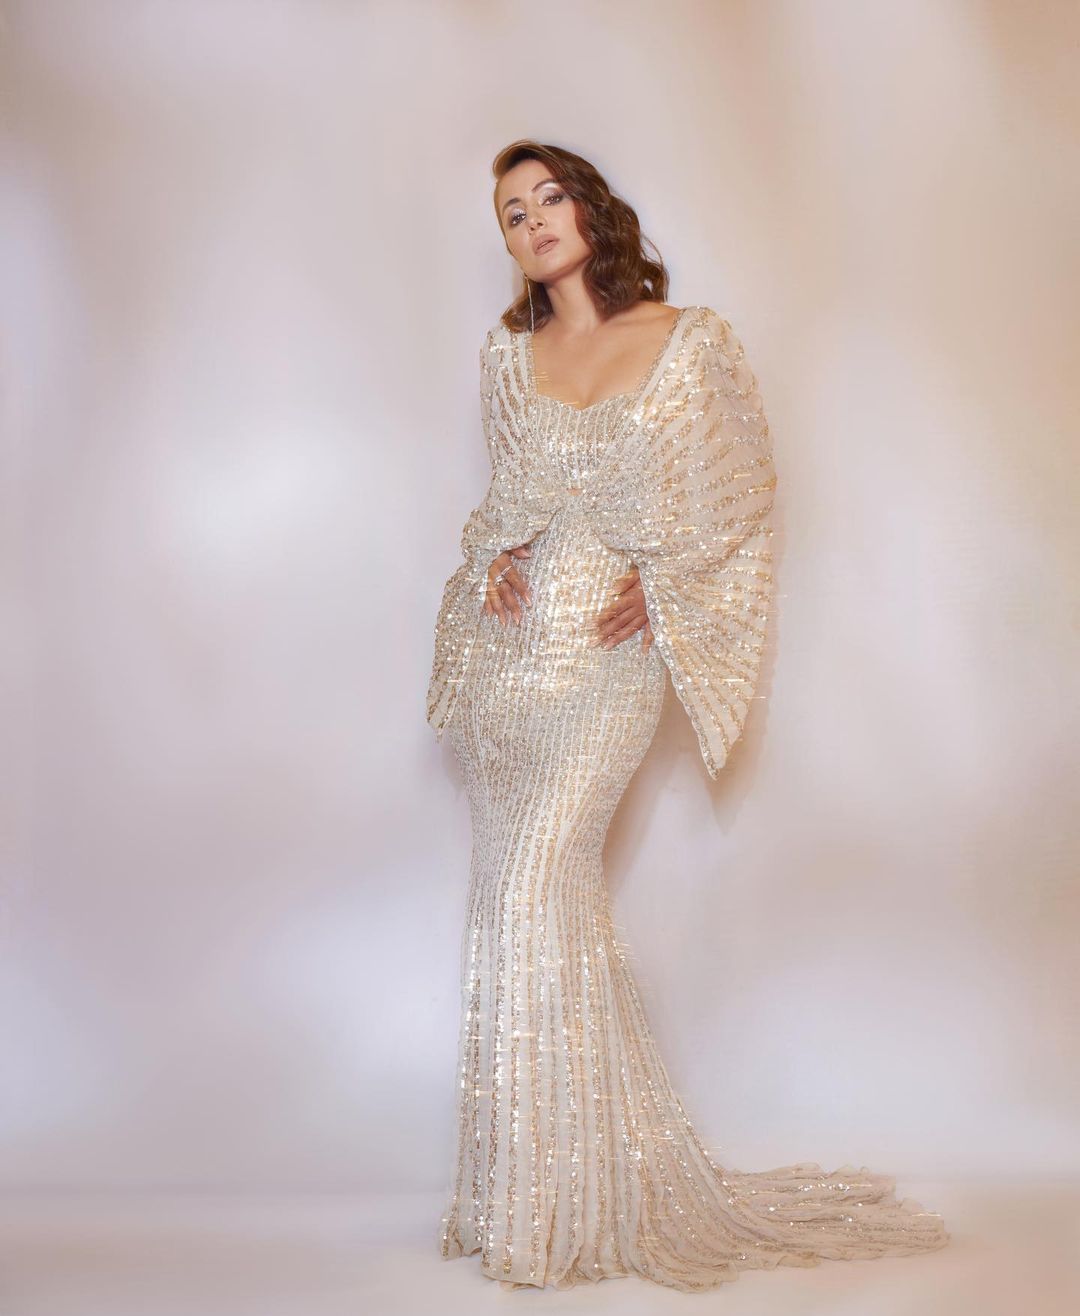 Hina Khan Looks Ravishing In White Shimmering Bodycon Gown